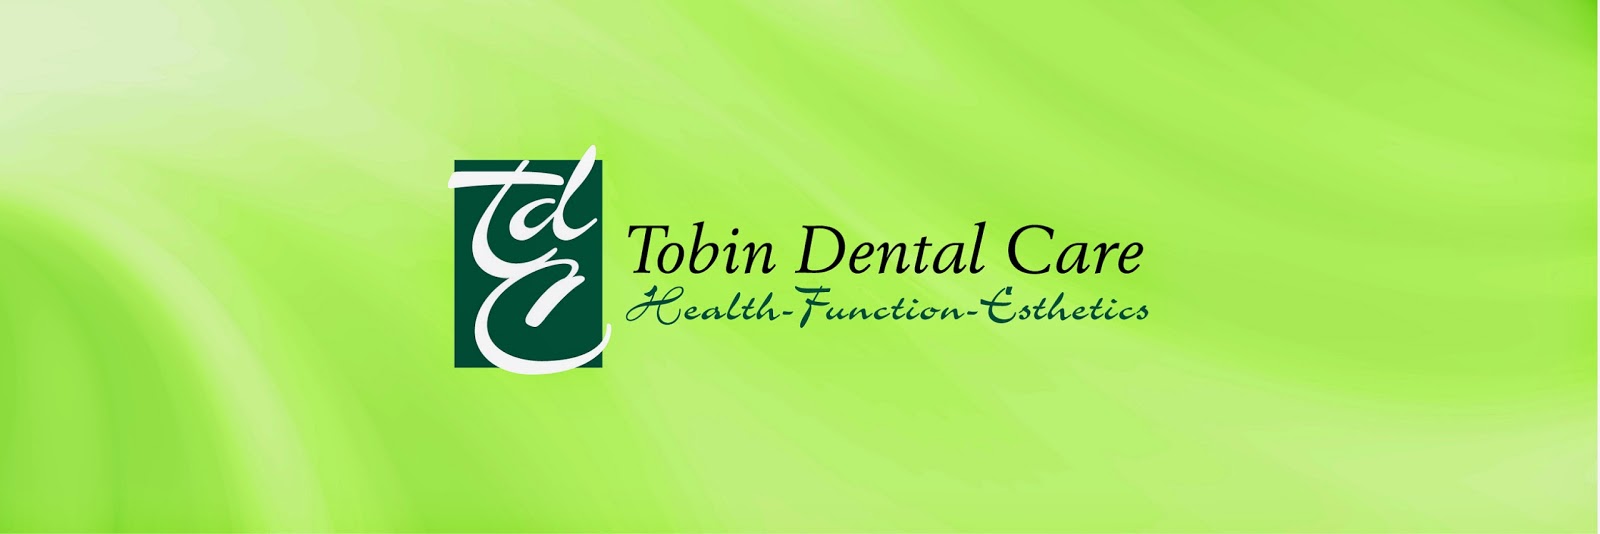 Photo of Tobin Dental Care, Dr. Nancy Tobin in Garden City, New York, United States - 3 Picture of Point of interest, Establishment, Health, Dentist